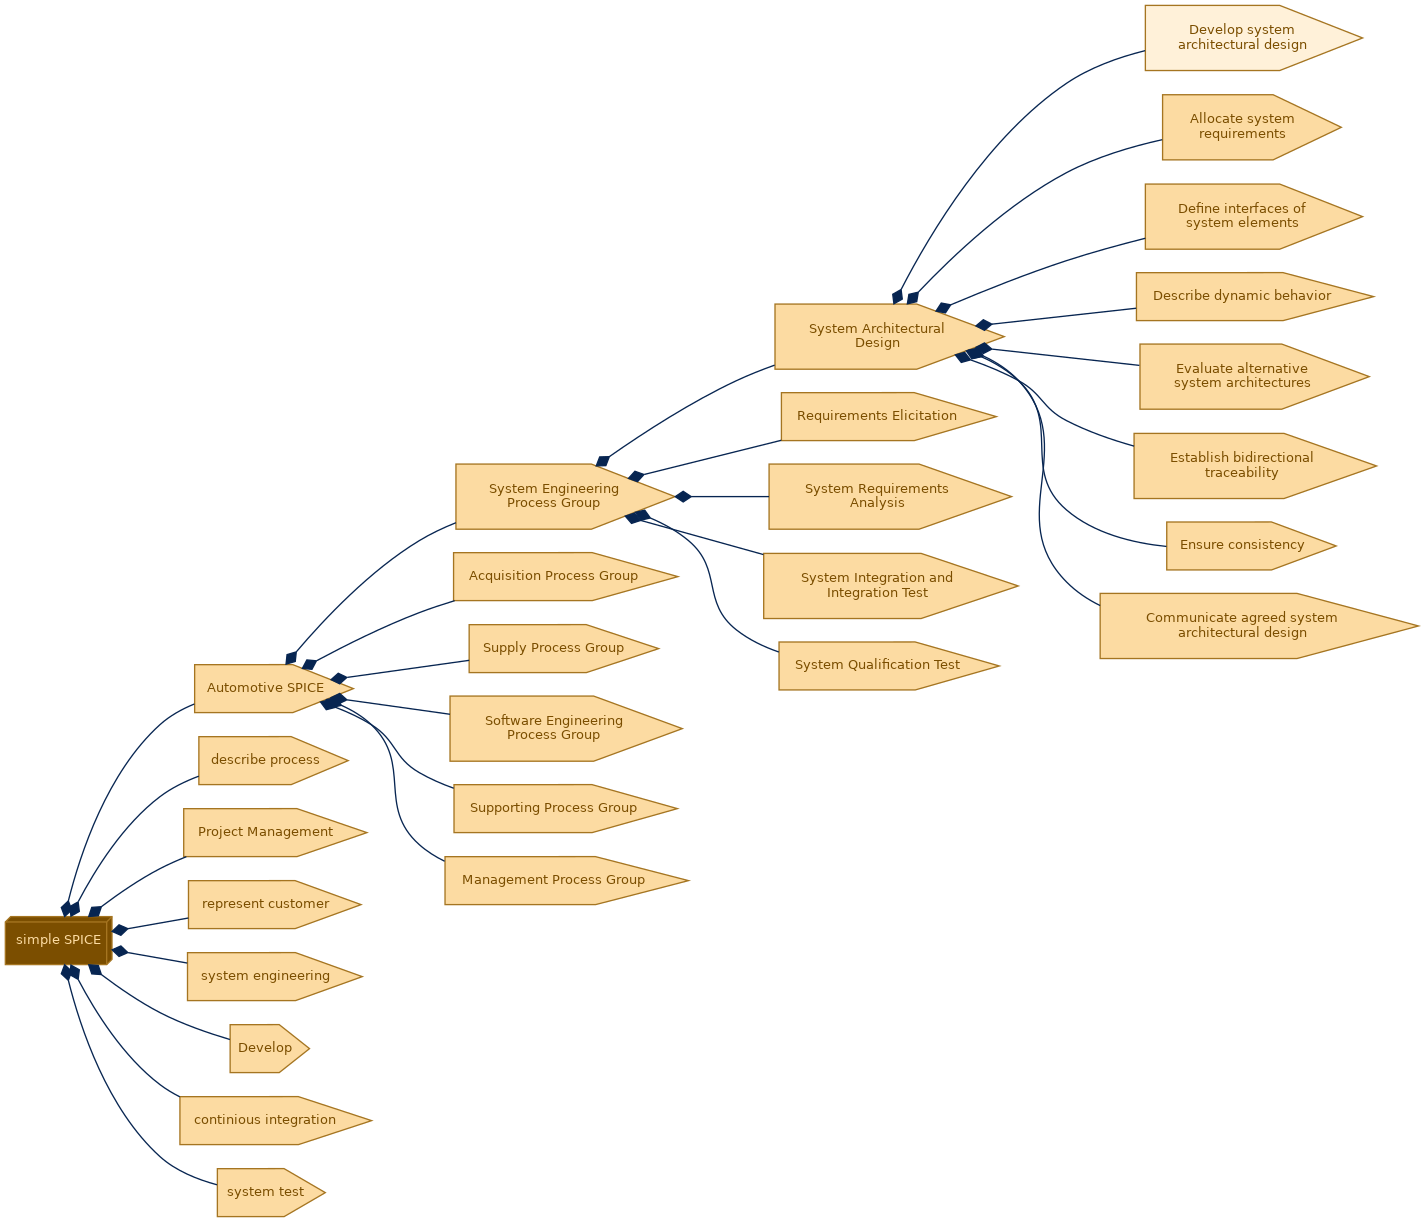 spem diagram of the activity breakdown: Develop system architectural design